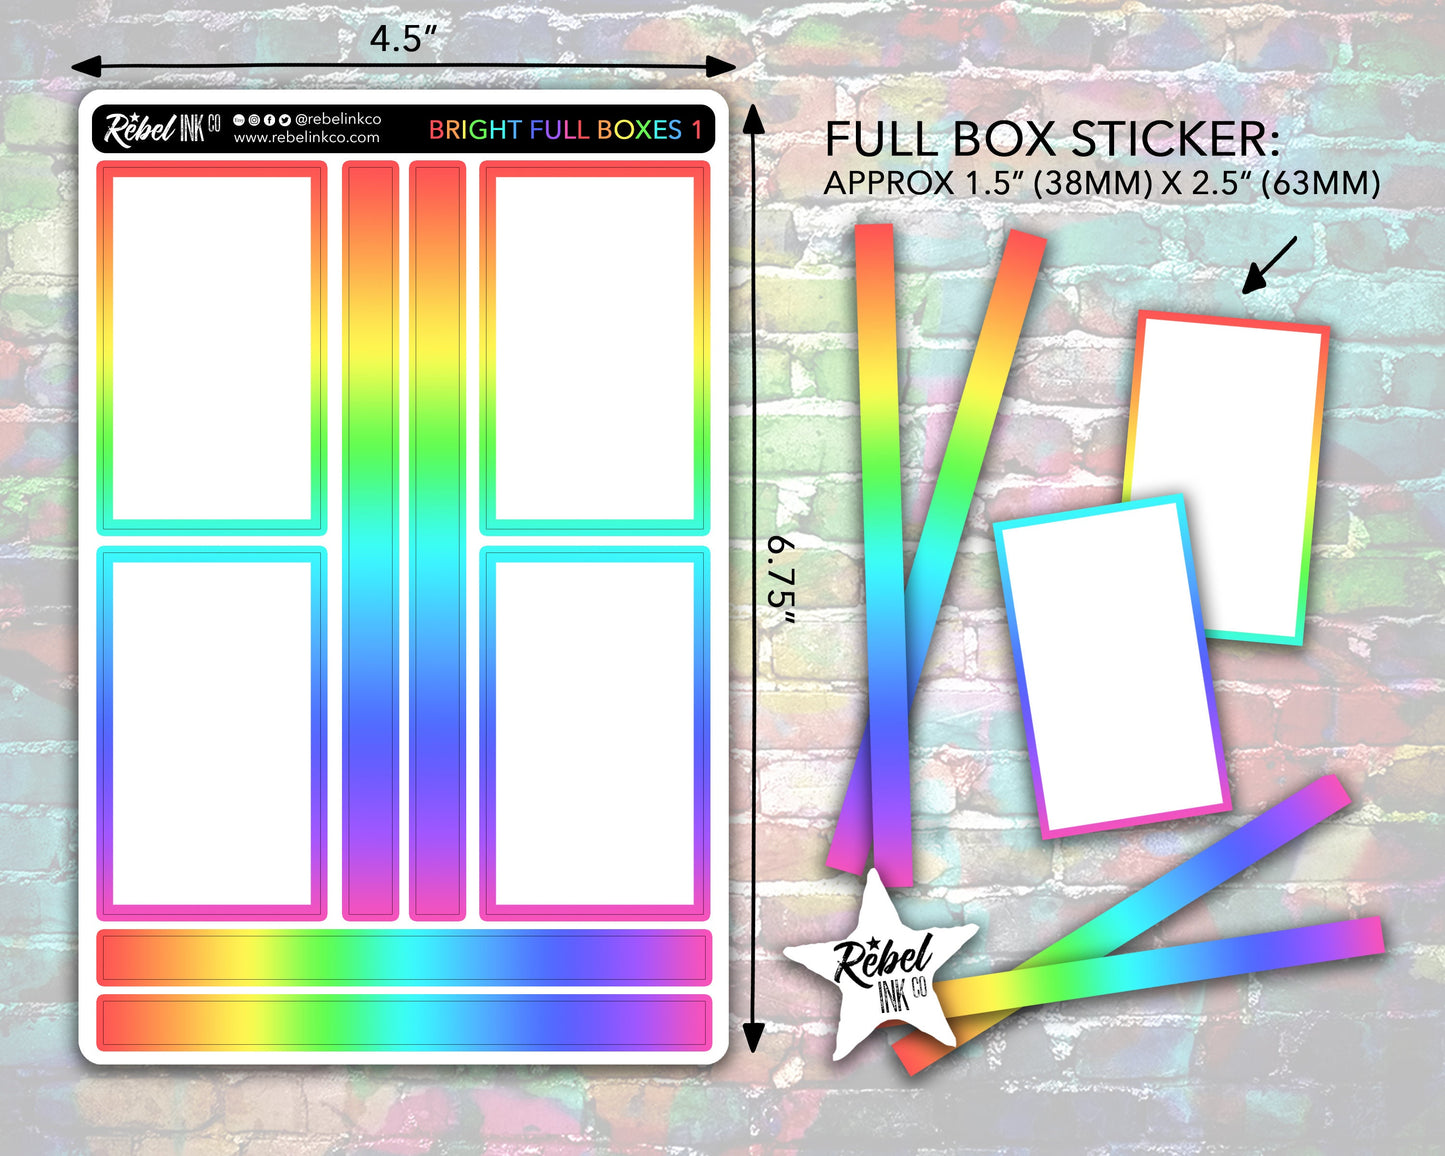 Open Full Box Stickers - Bright Rainbow